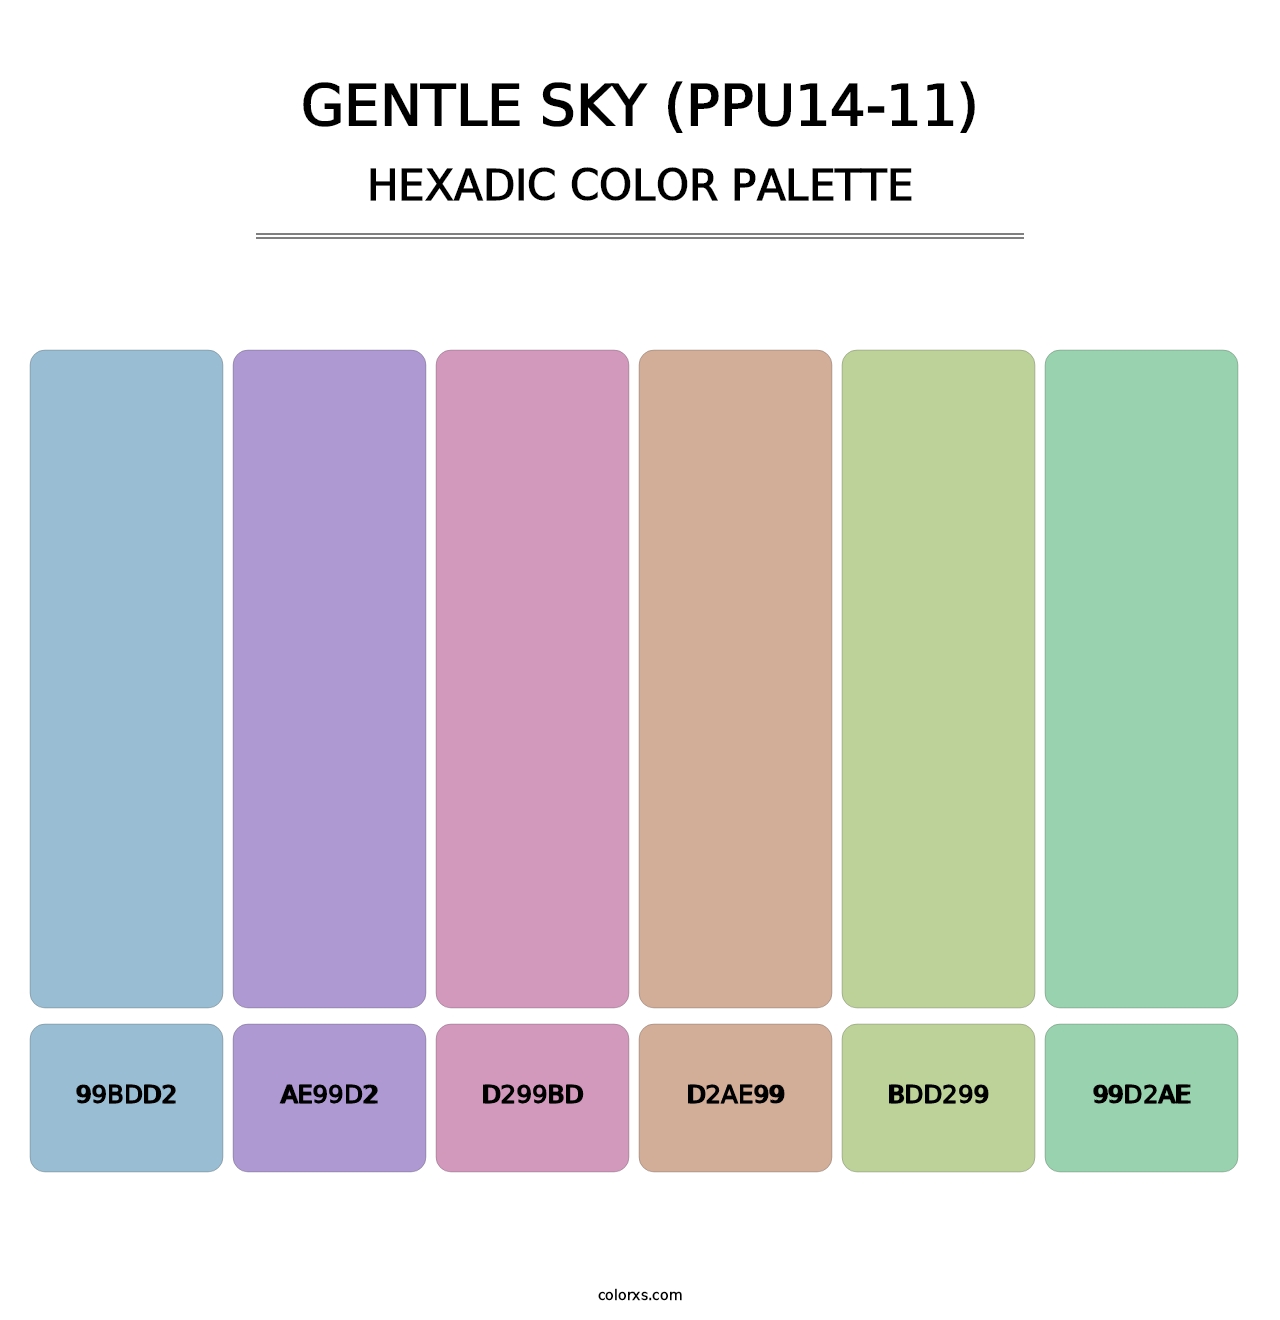 Gentle Sky (PPU14-11) - Hexadic Color Palette